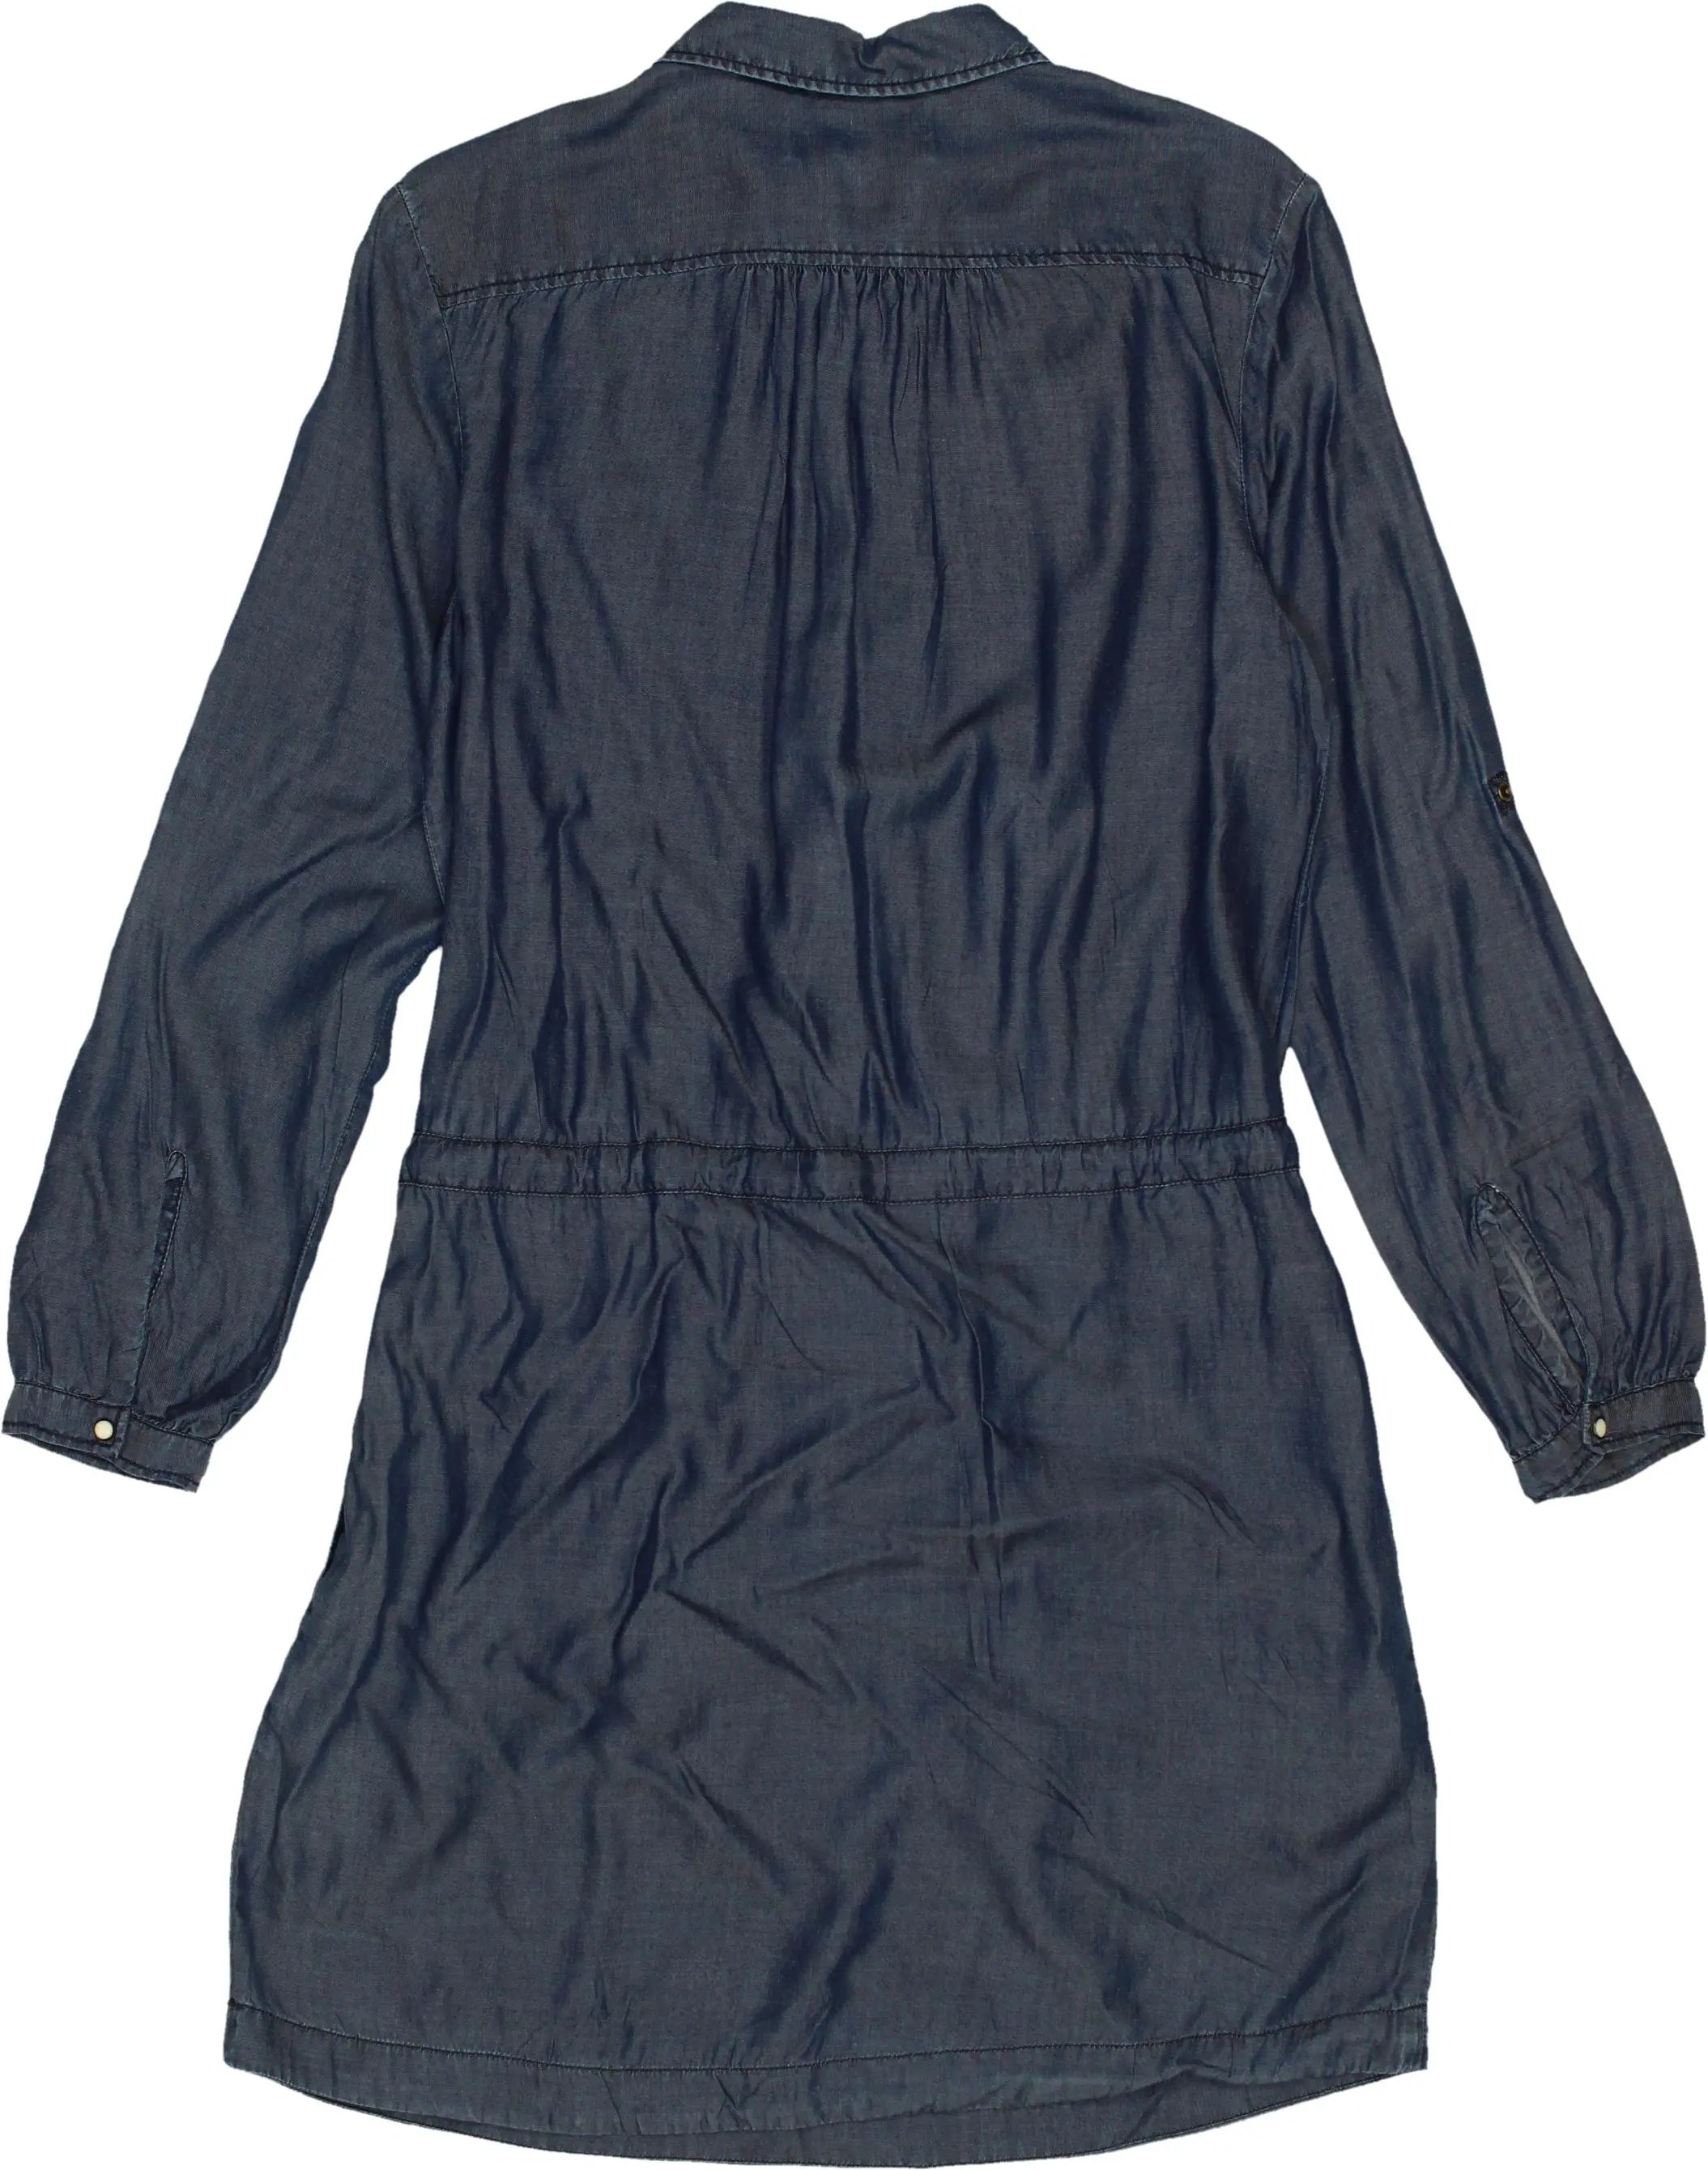 Esmara - Denim Dress- ThriftTale.com - Vintage and second handclothing